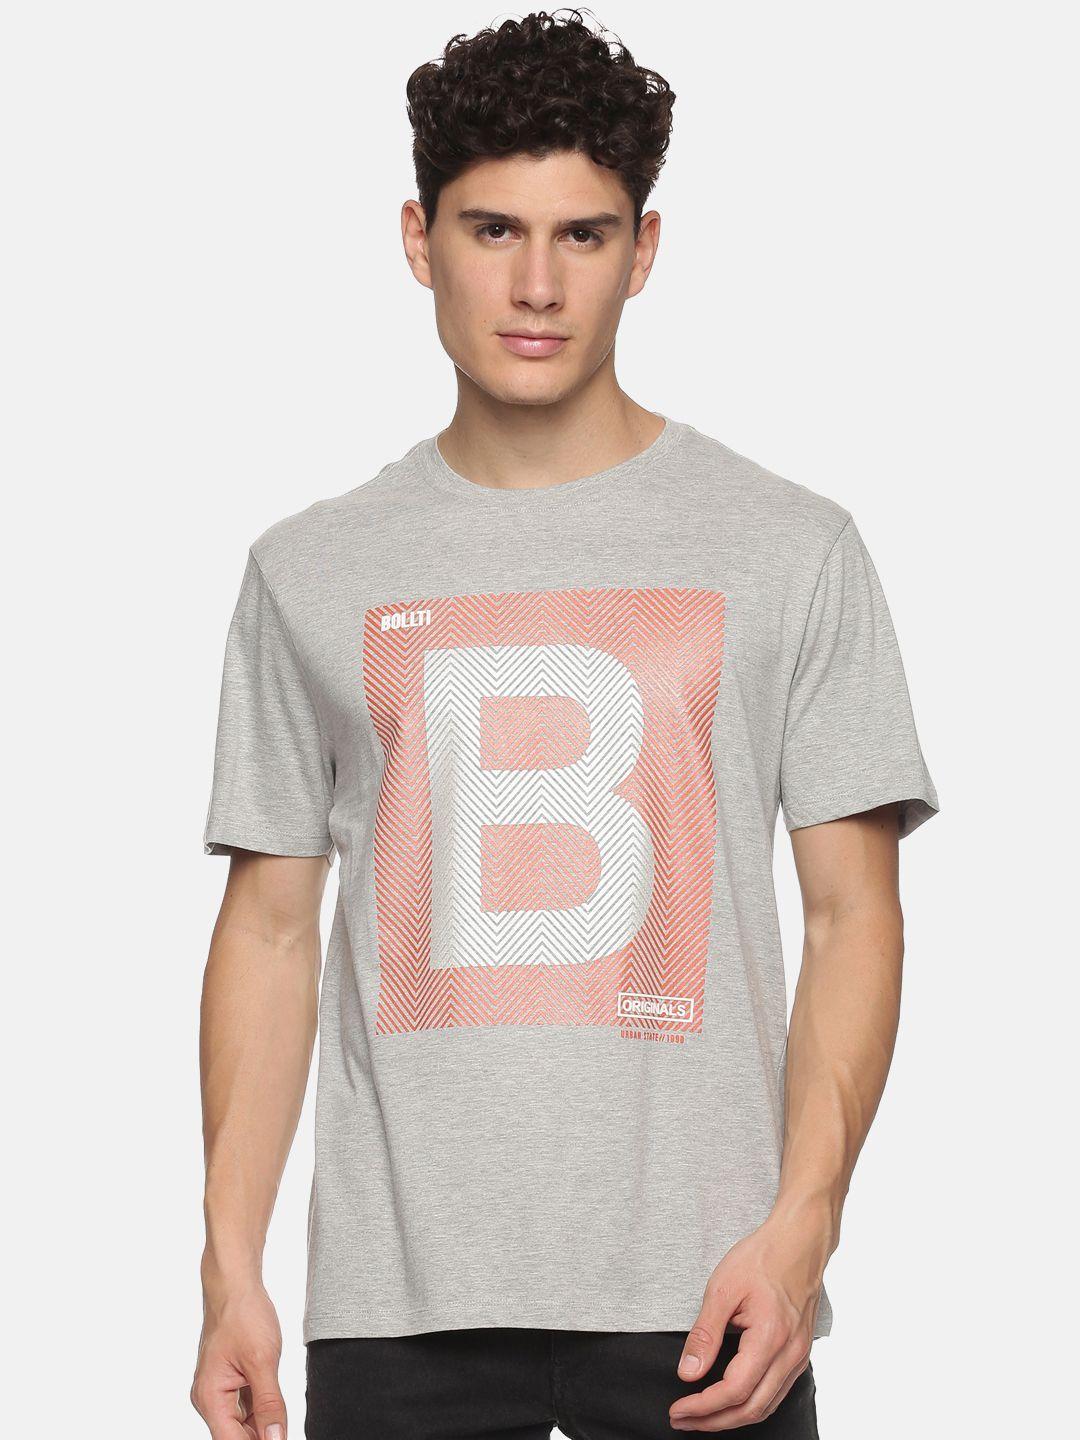 bollti graphic printed cotton t-shirt